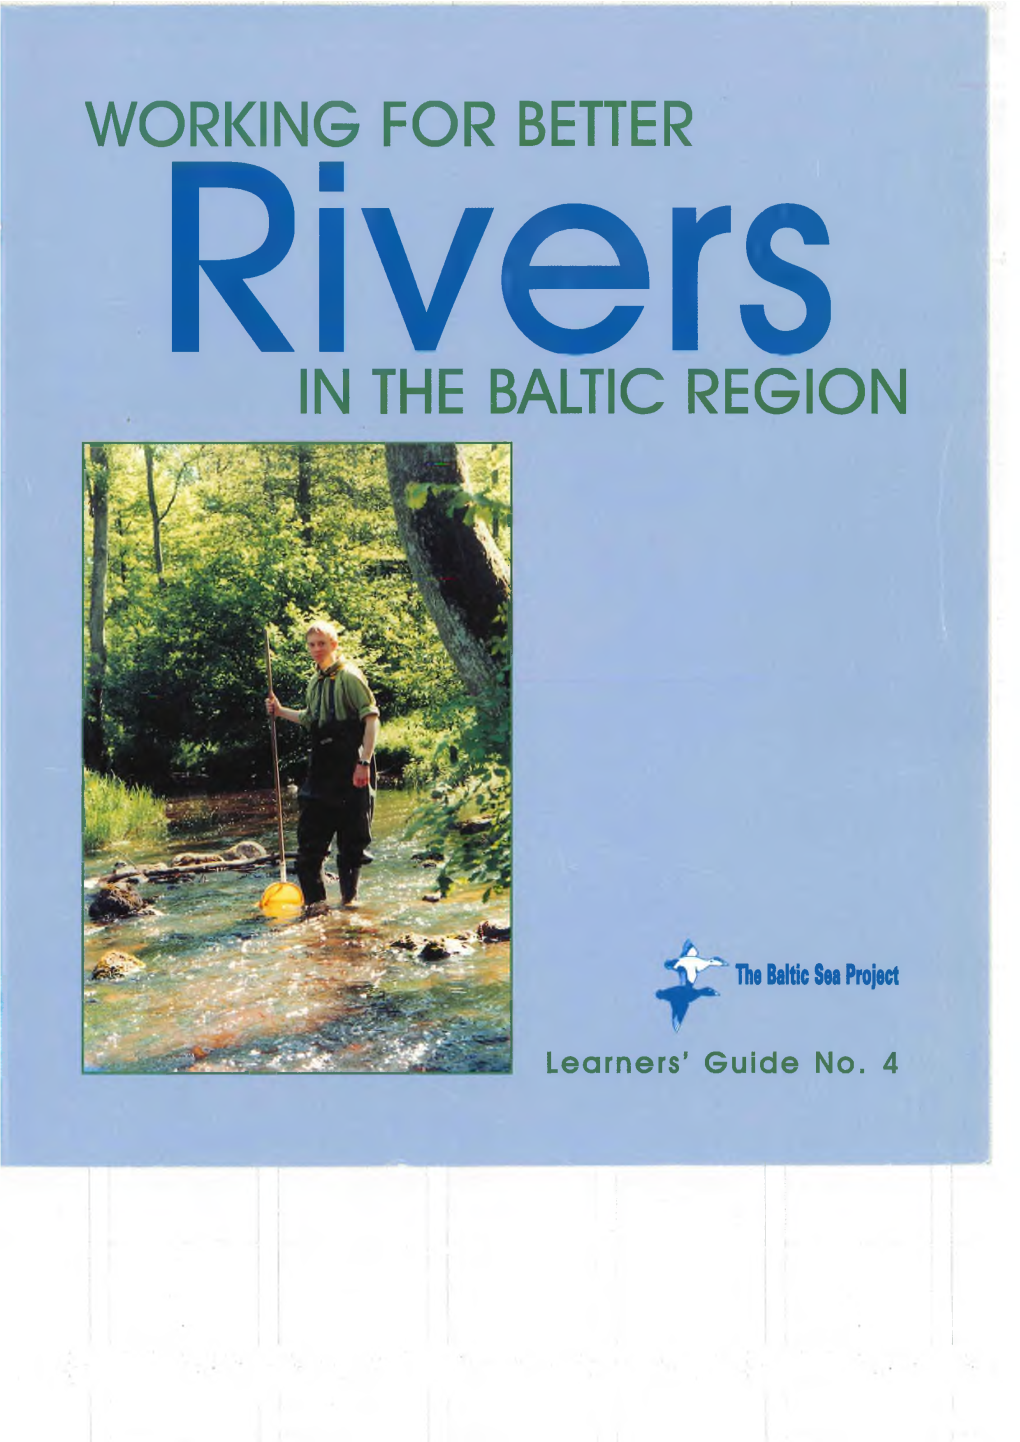 Riversin the BALTIC REGION